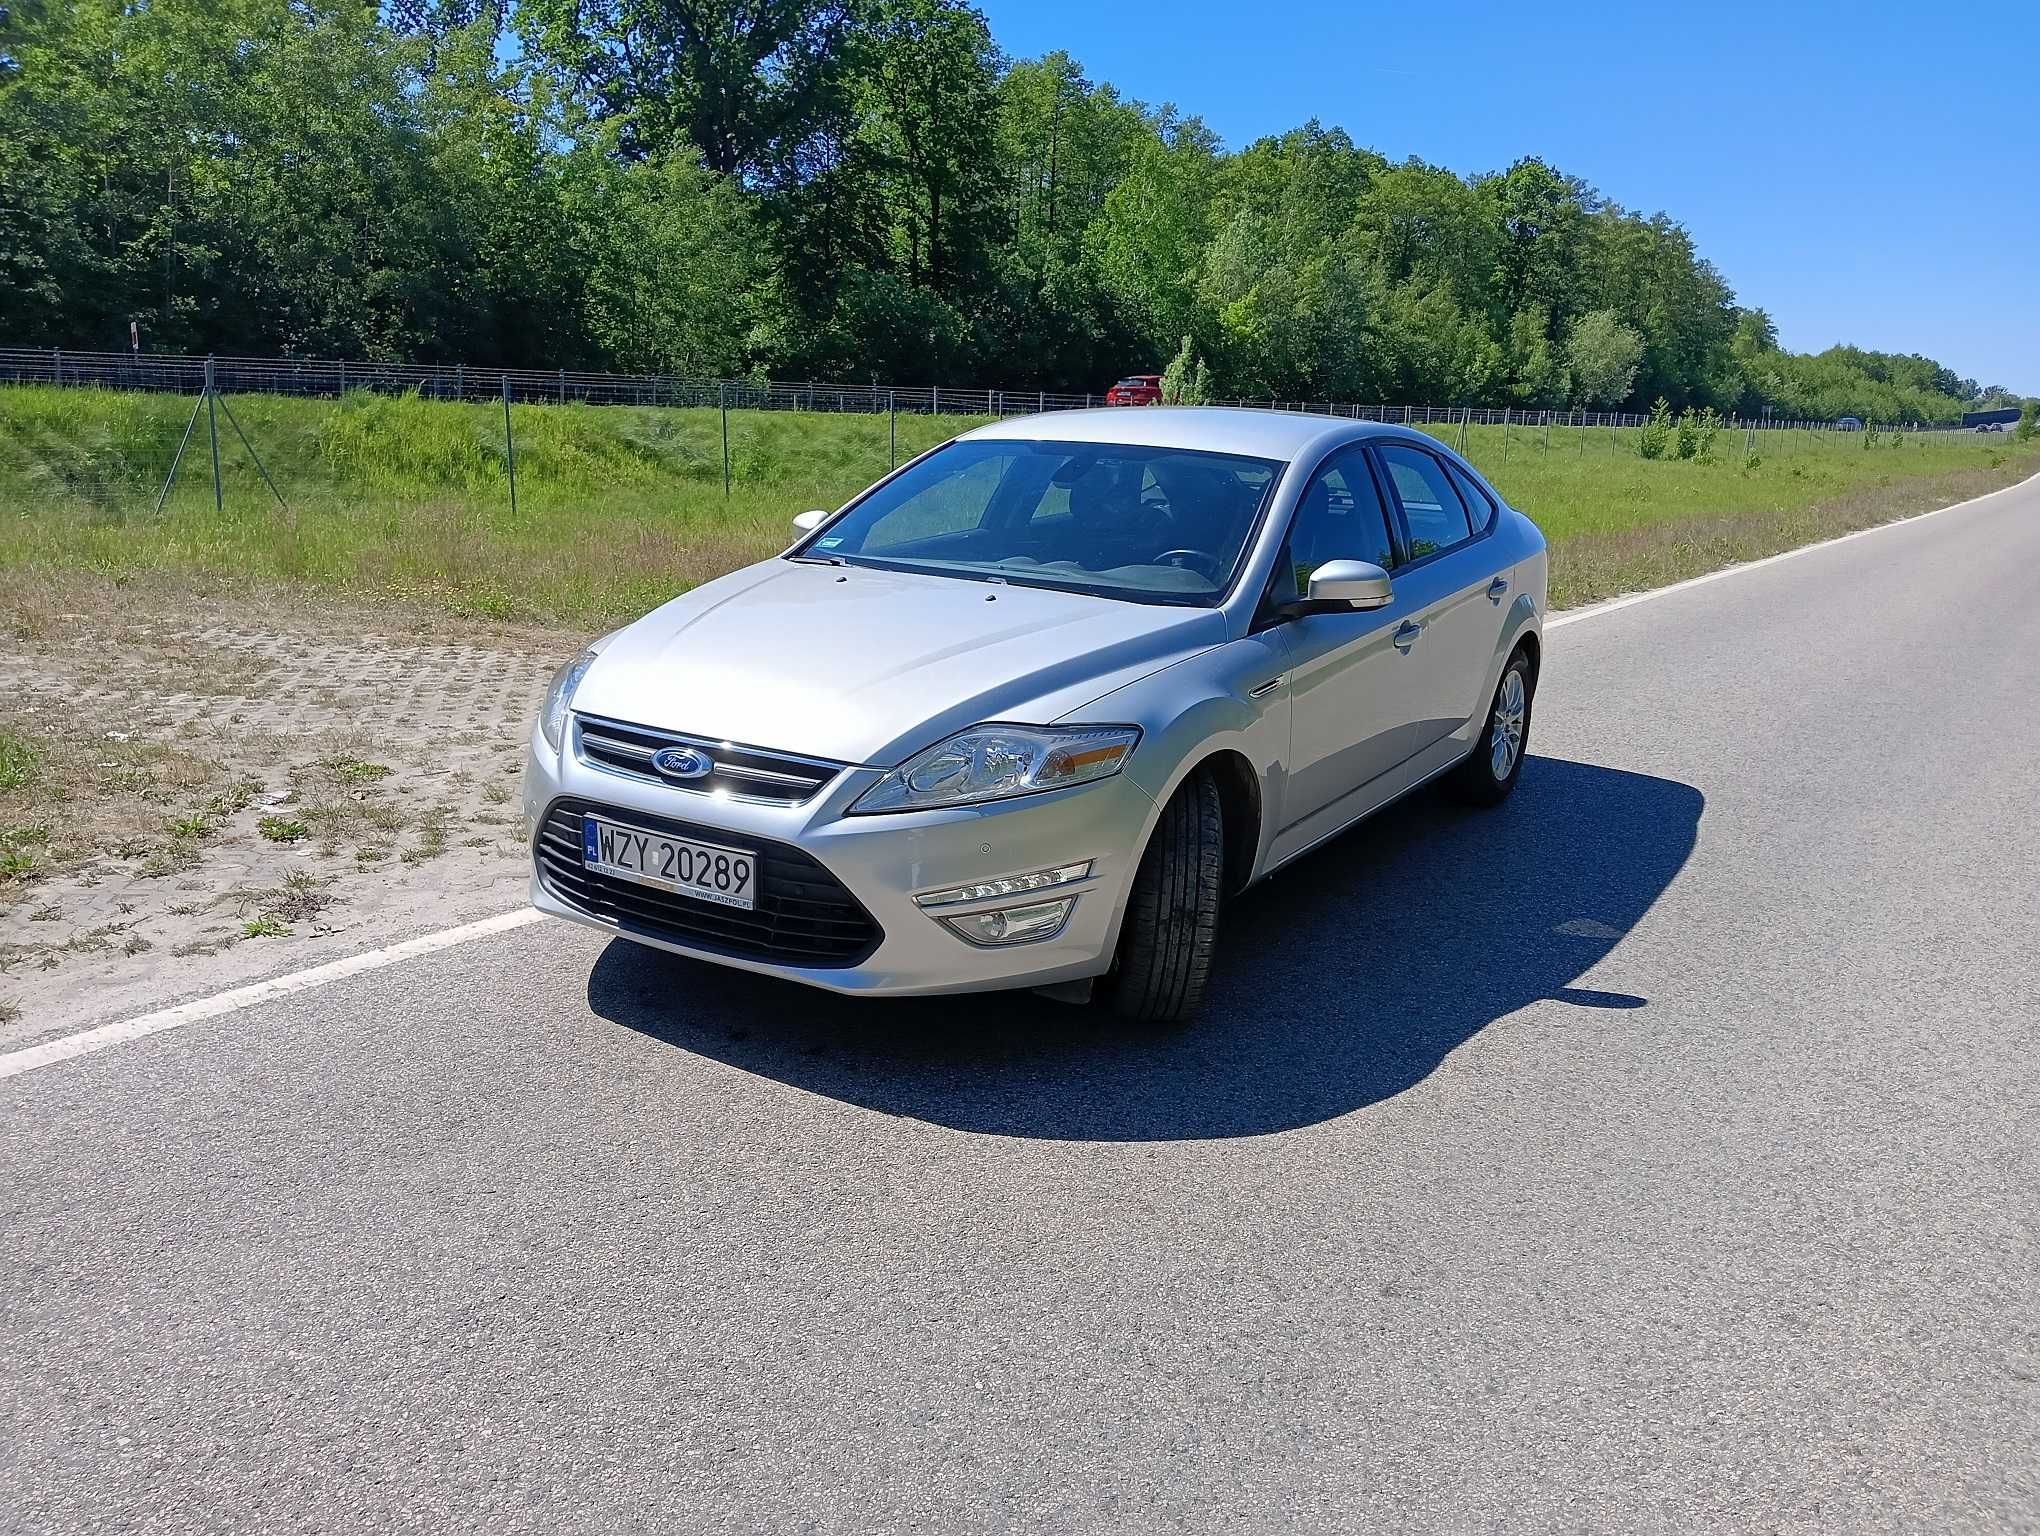 Ford Mondeo Hatchback 1.6 Ecoboost 160 KM- Salon Polska Uczciwie